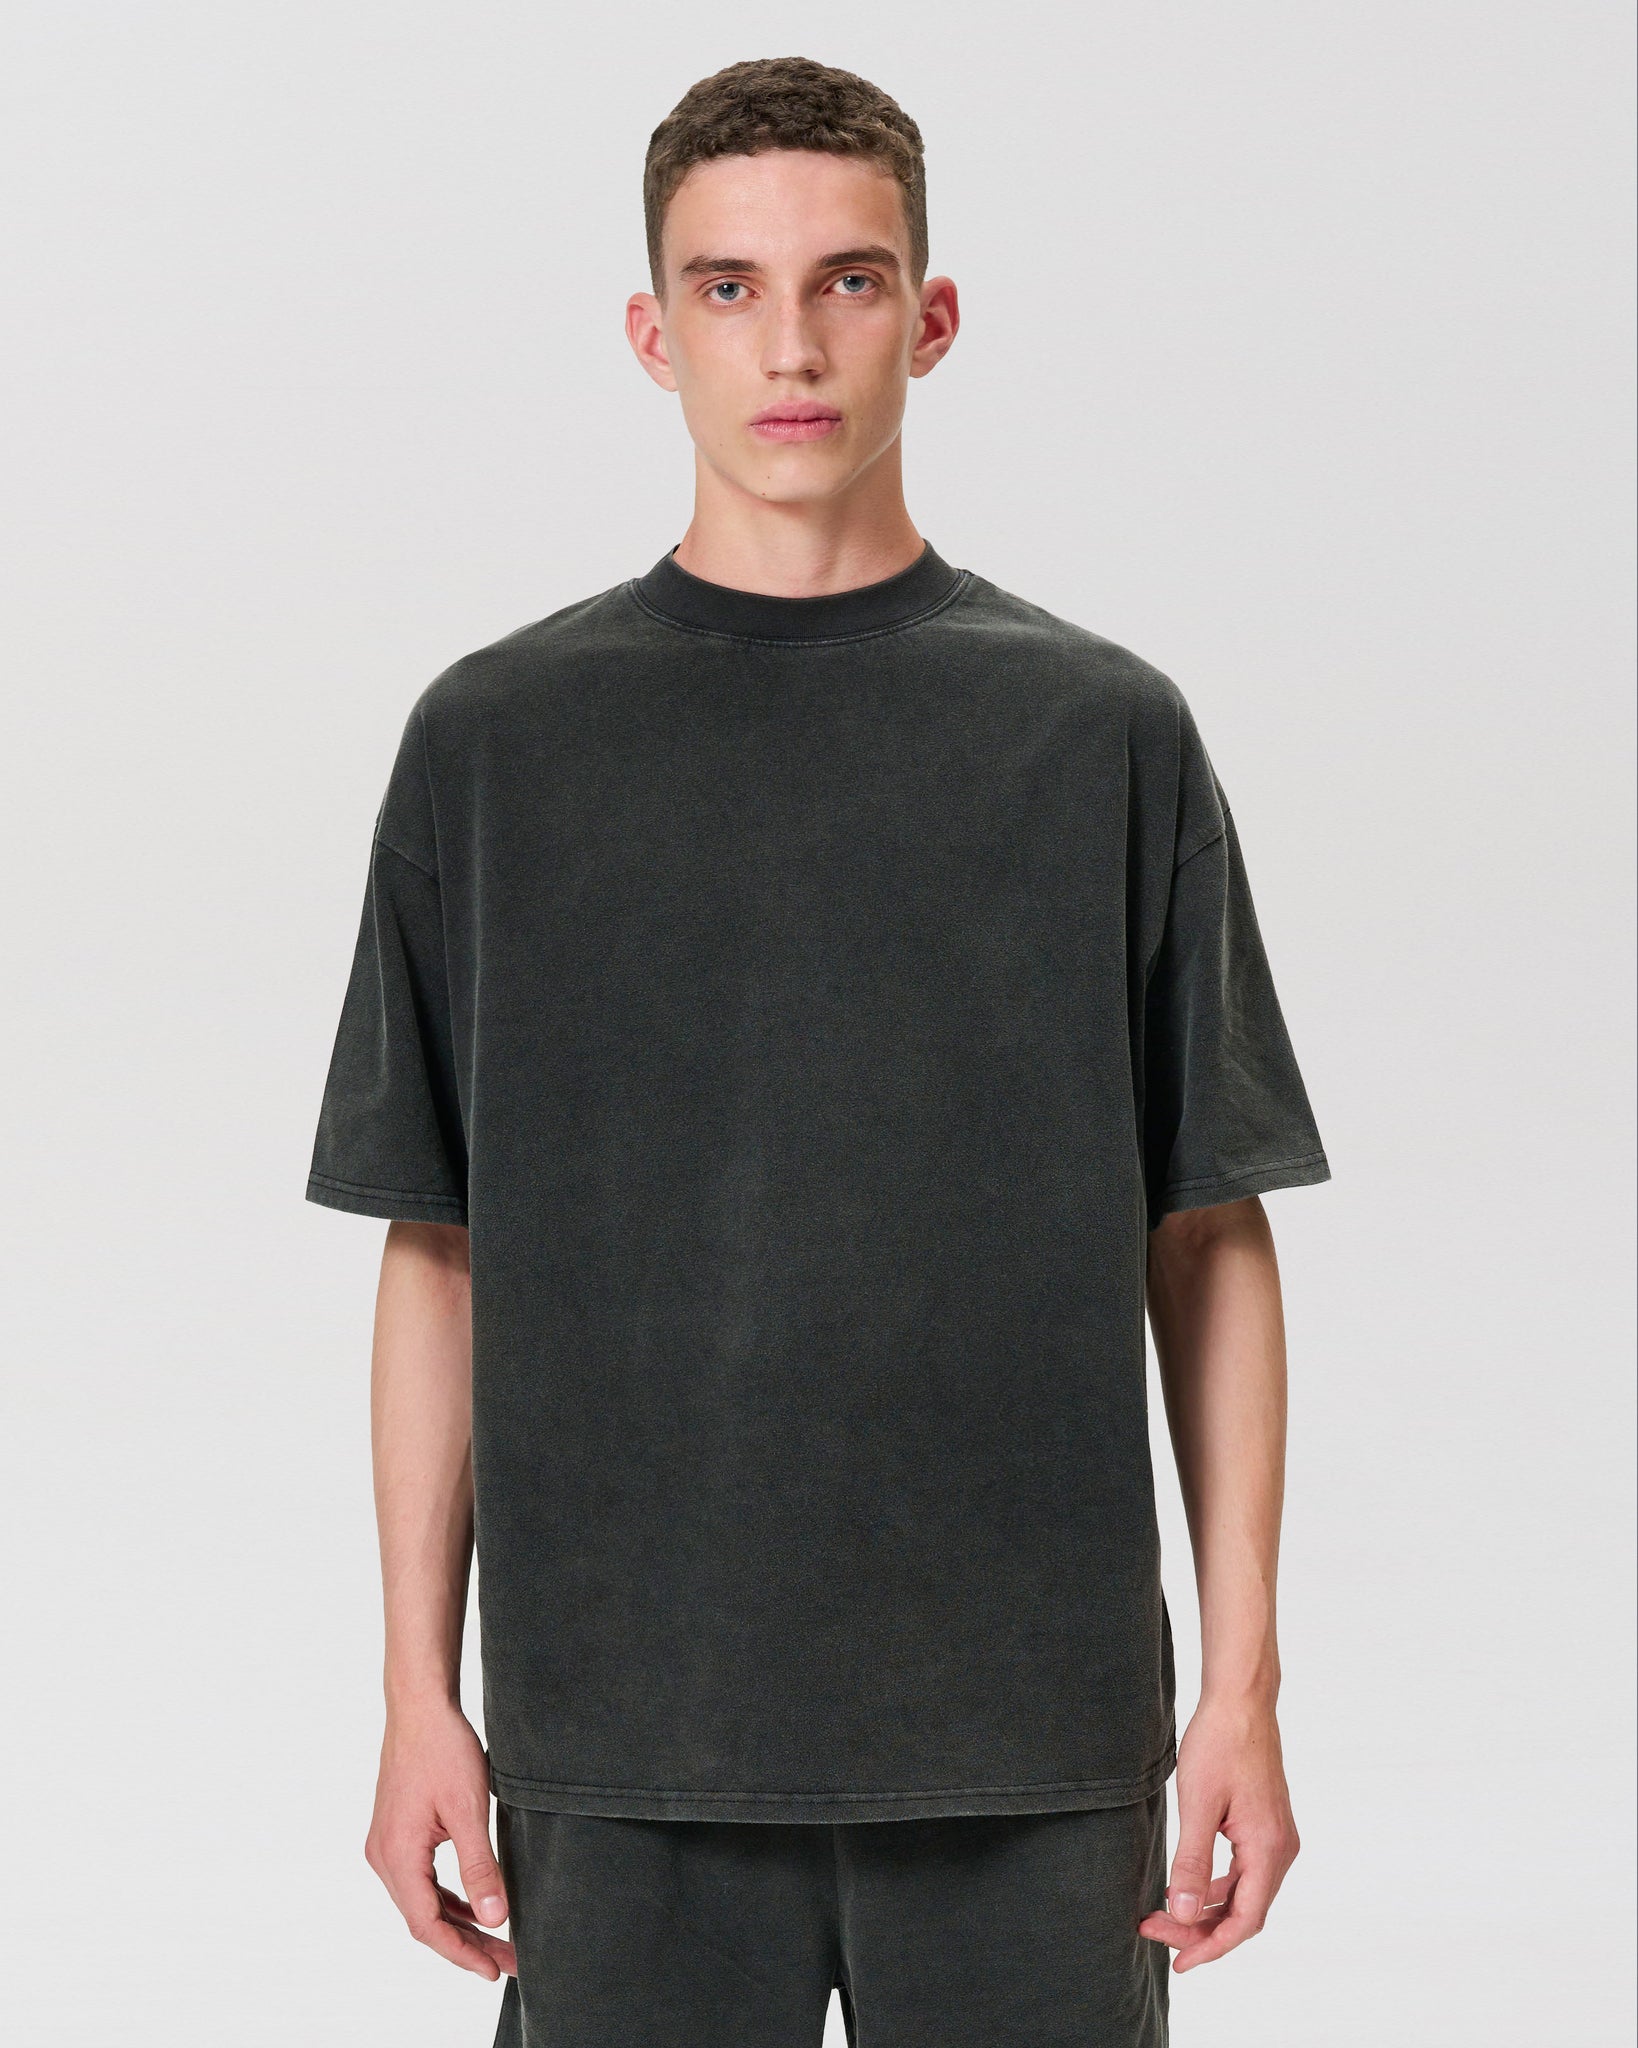 ESSENTIAL OVERSIZED T-SHIRT  Men's t-shirt, blank t-shirt - Washed black –  NEWKIND